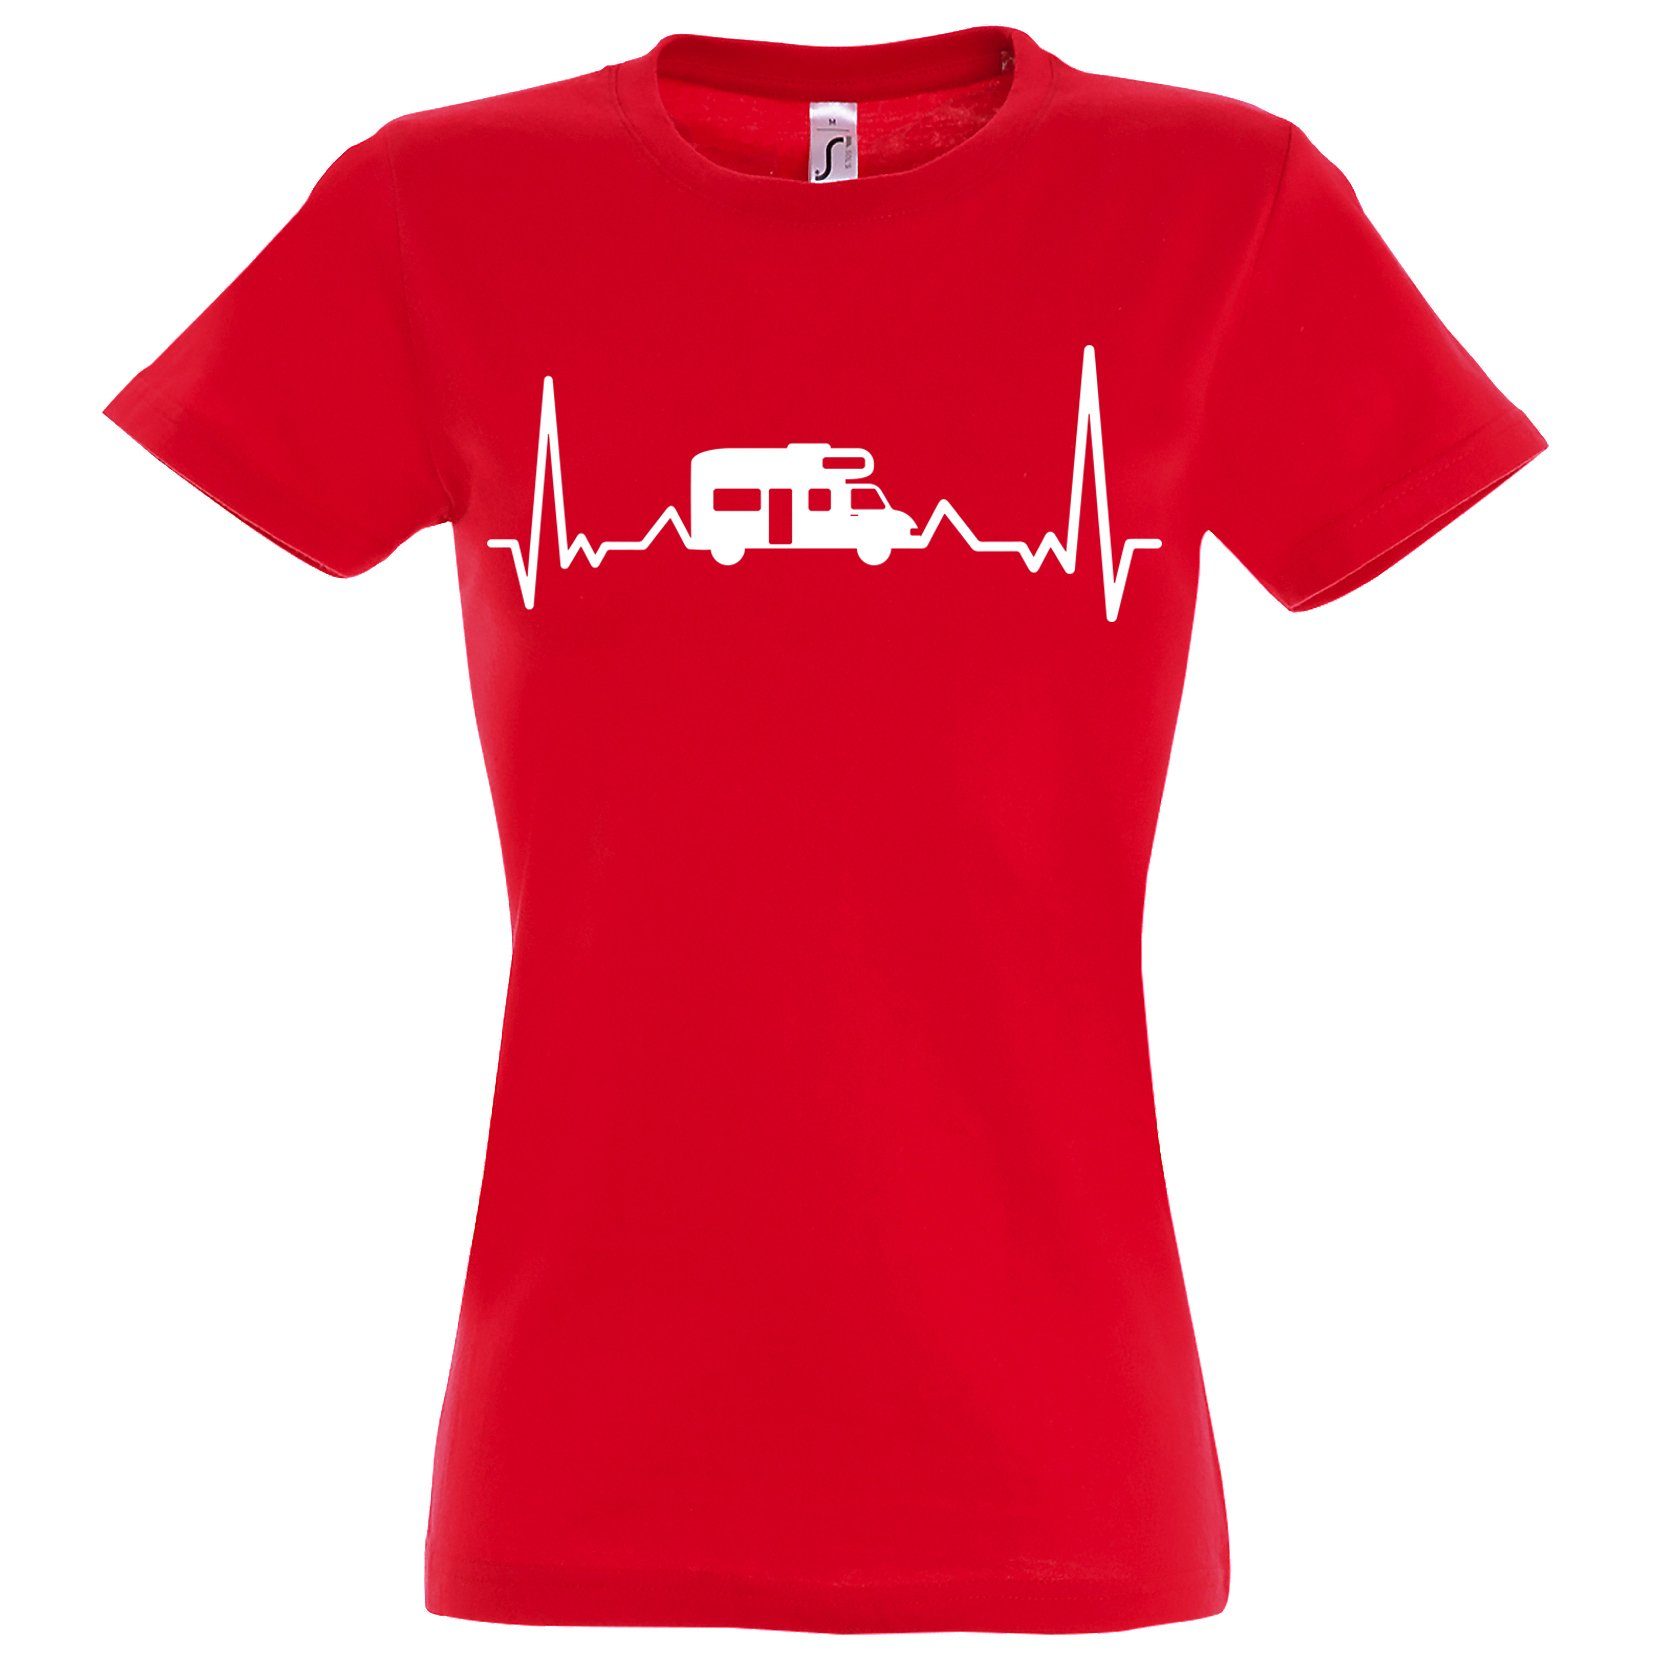 Youth Designz T-Shirt Damen Camping Rot Capming Frontprint mit Herzschlag Shirt lustigem